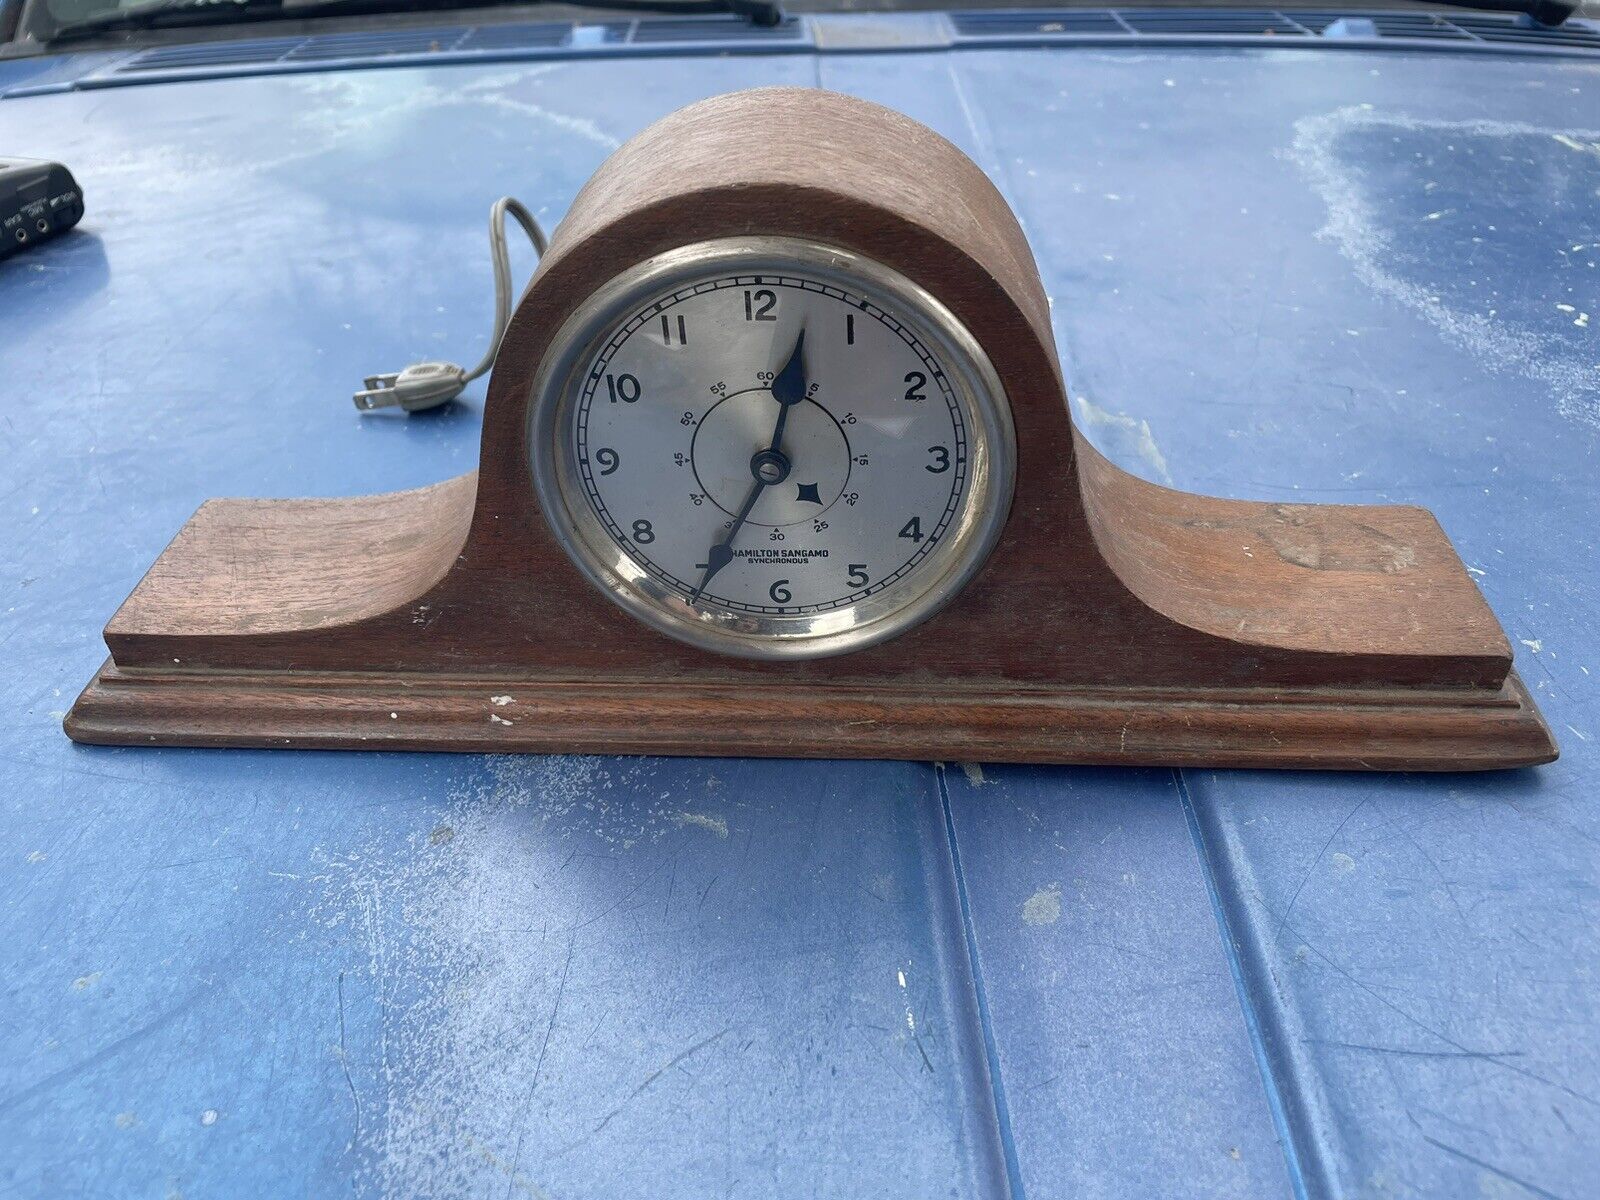 Vintage HAMILTON SANGAMO Synchronous Motor Mantel Clock S-405 untested as is